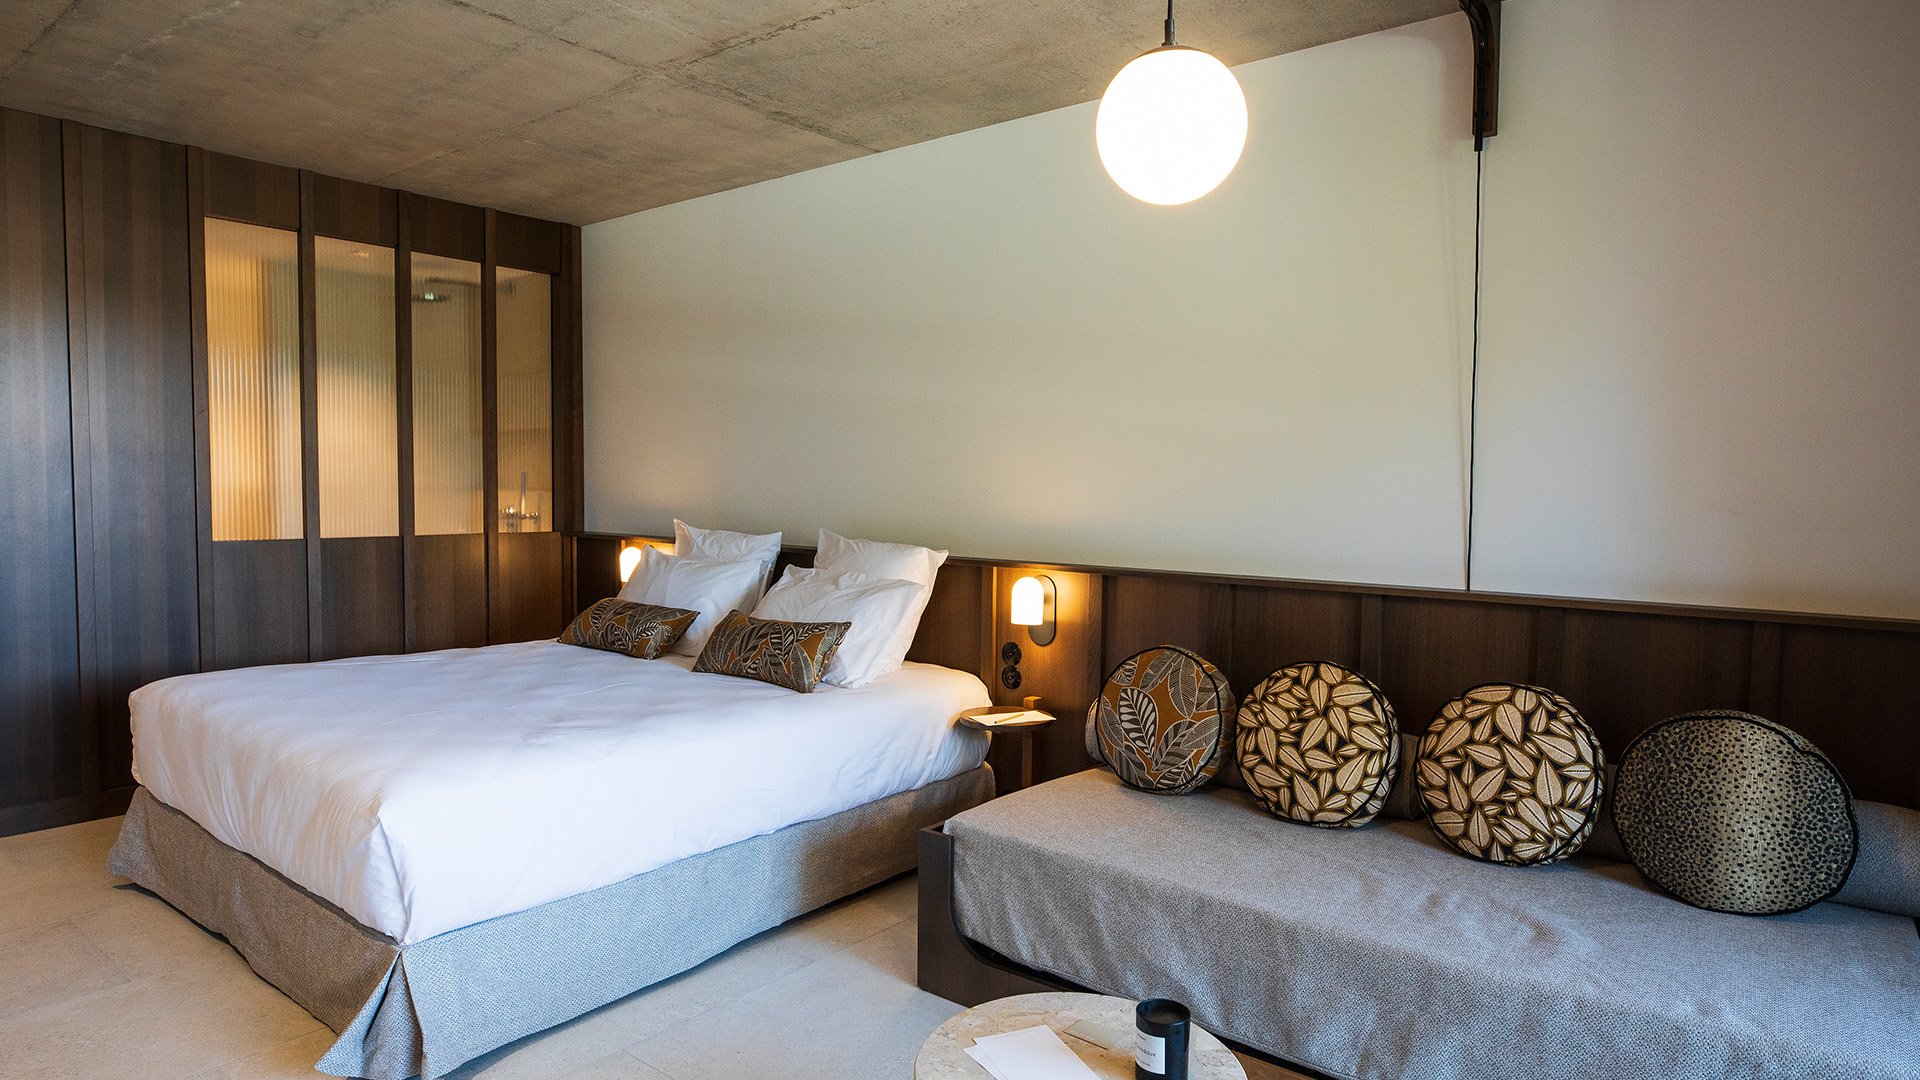 Boutique hotel with spa and restaurant Corsica - Son del Mar - bedroom